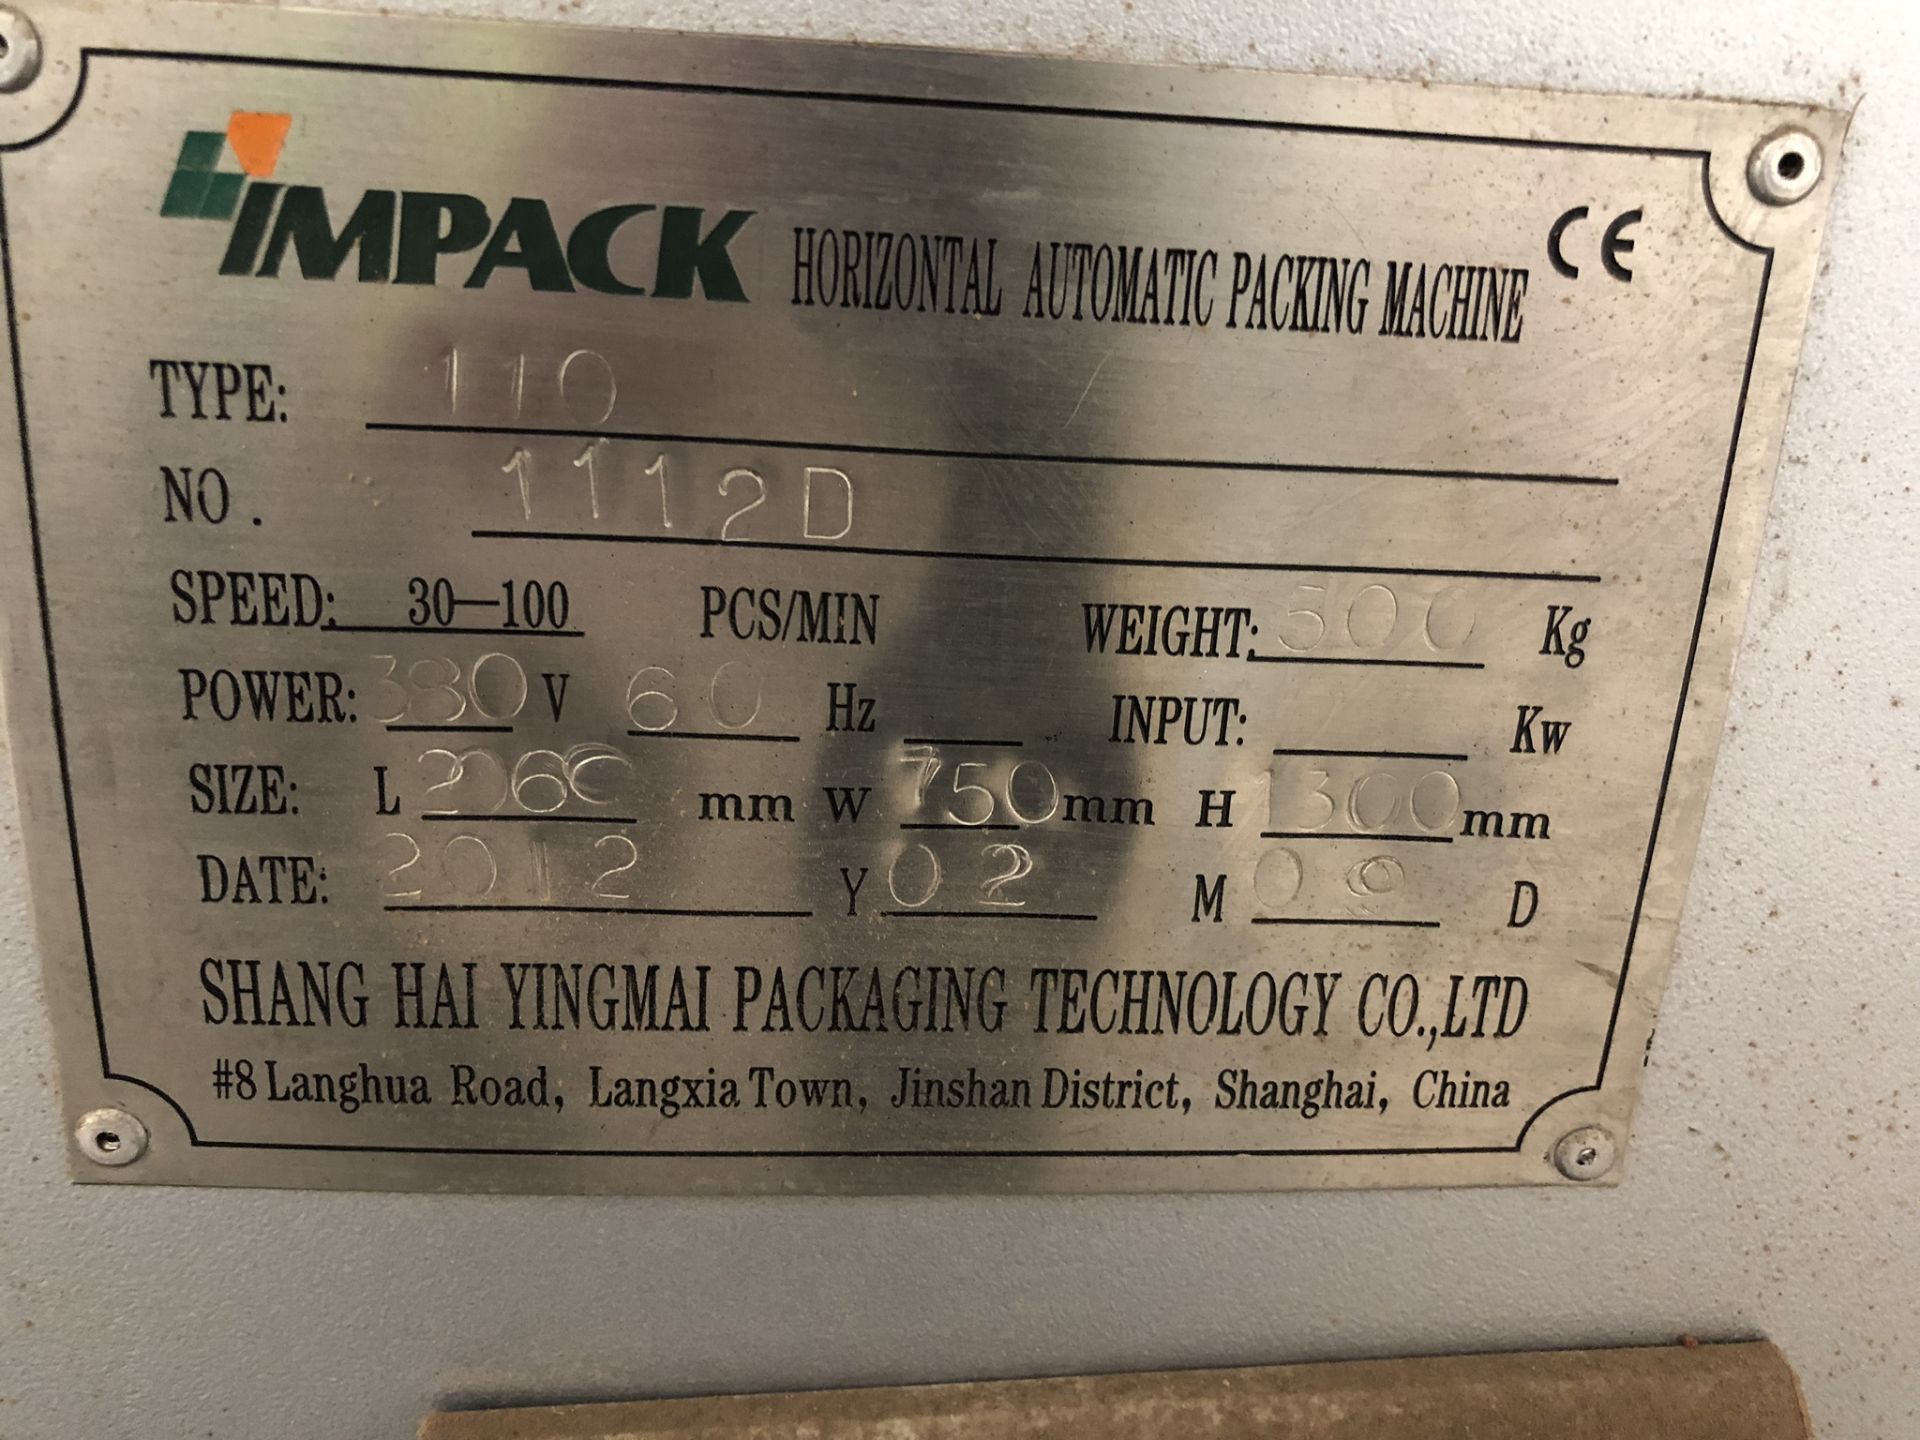 Impack horizontal automatic packing machine - Image 5 of 6